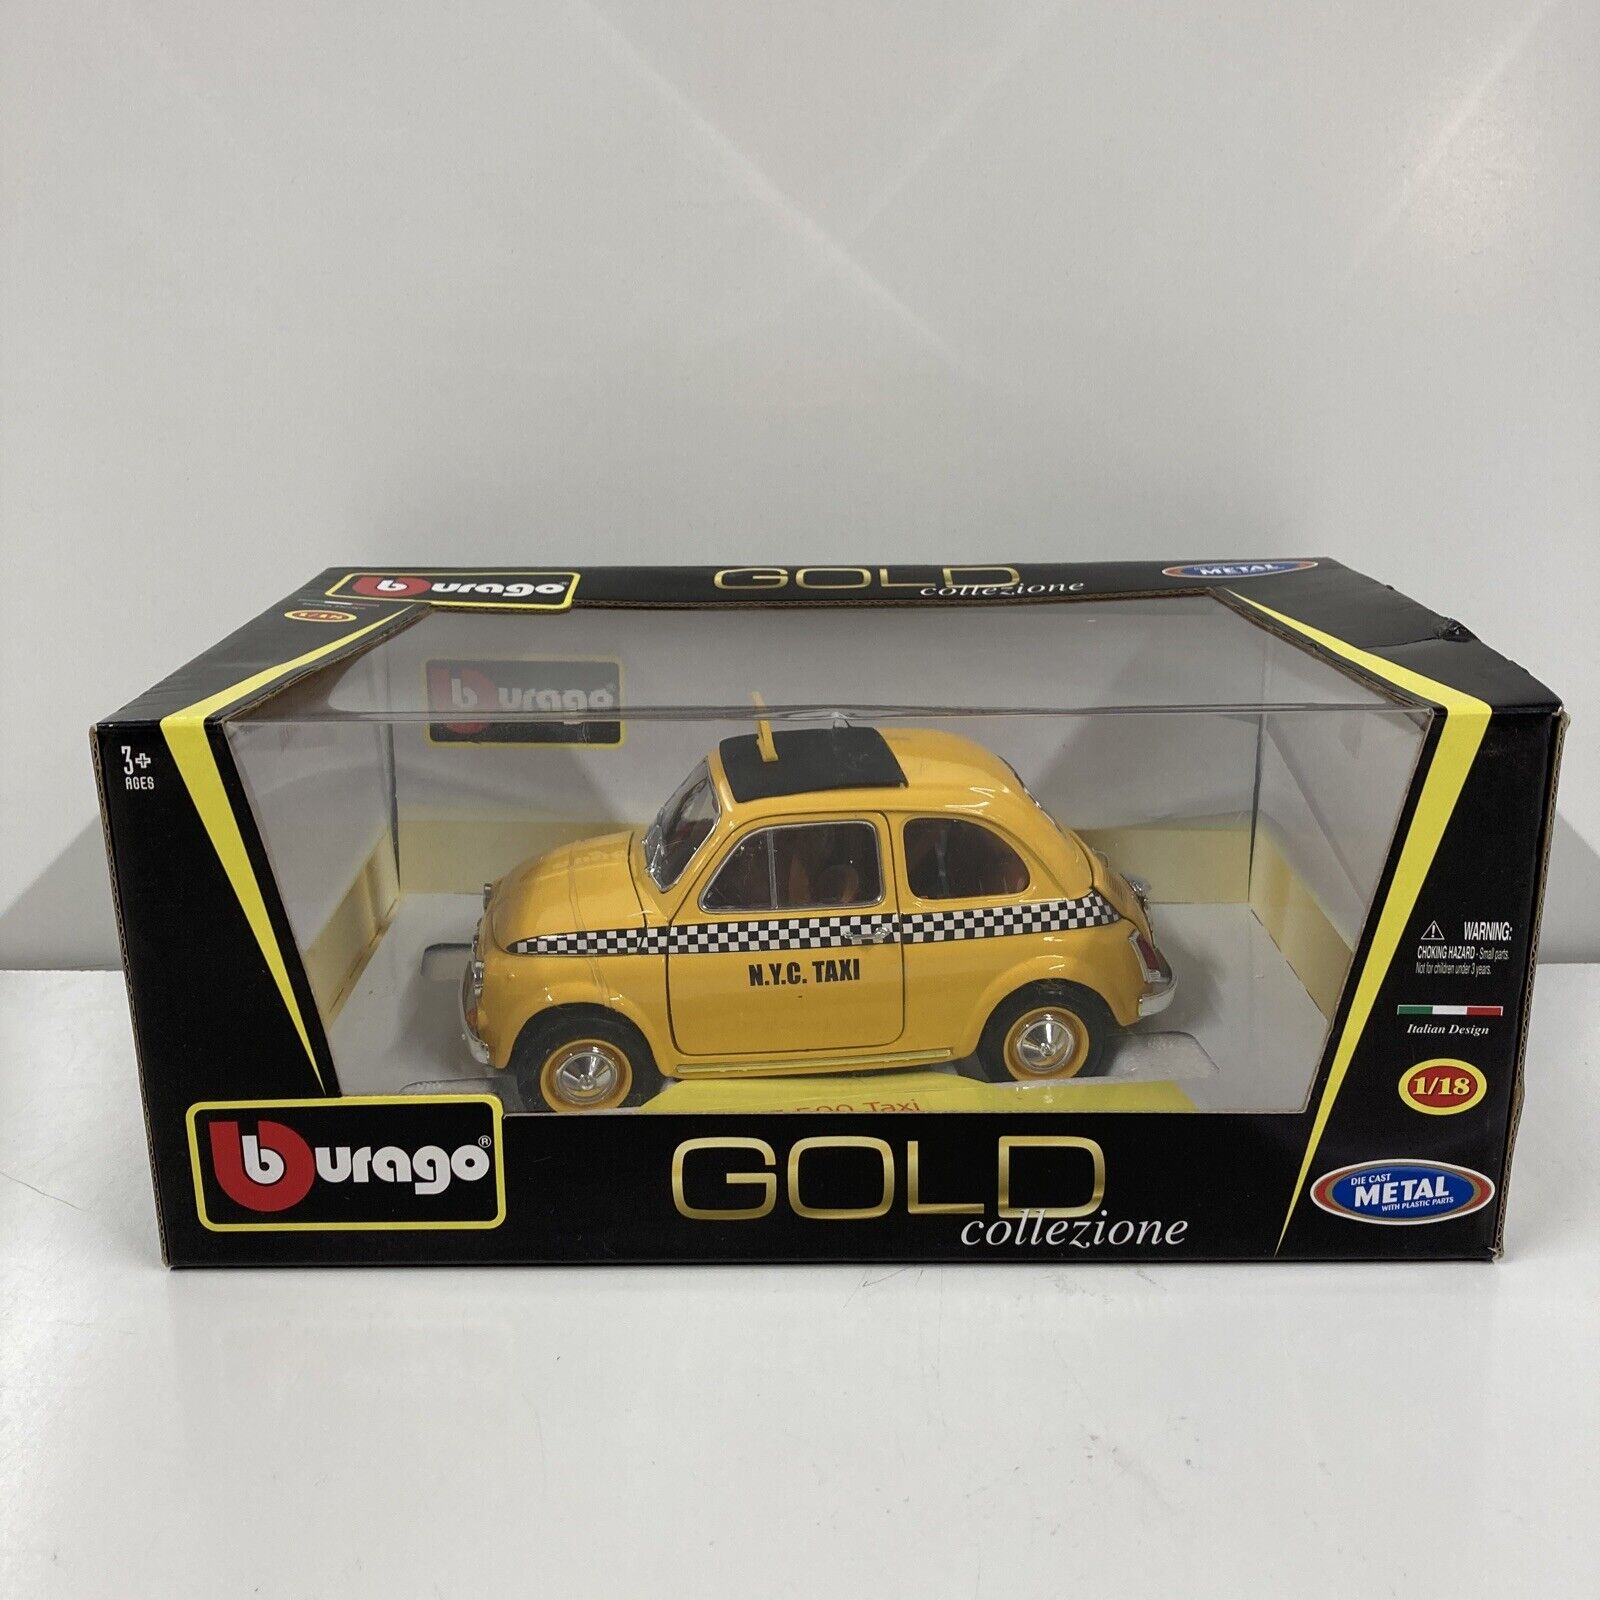 BURAGO Gold Collezione FIAT 500 taxi 1/18 1:18 scale die cast model car NEW